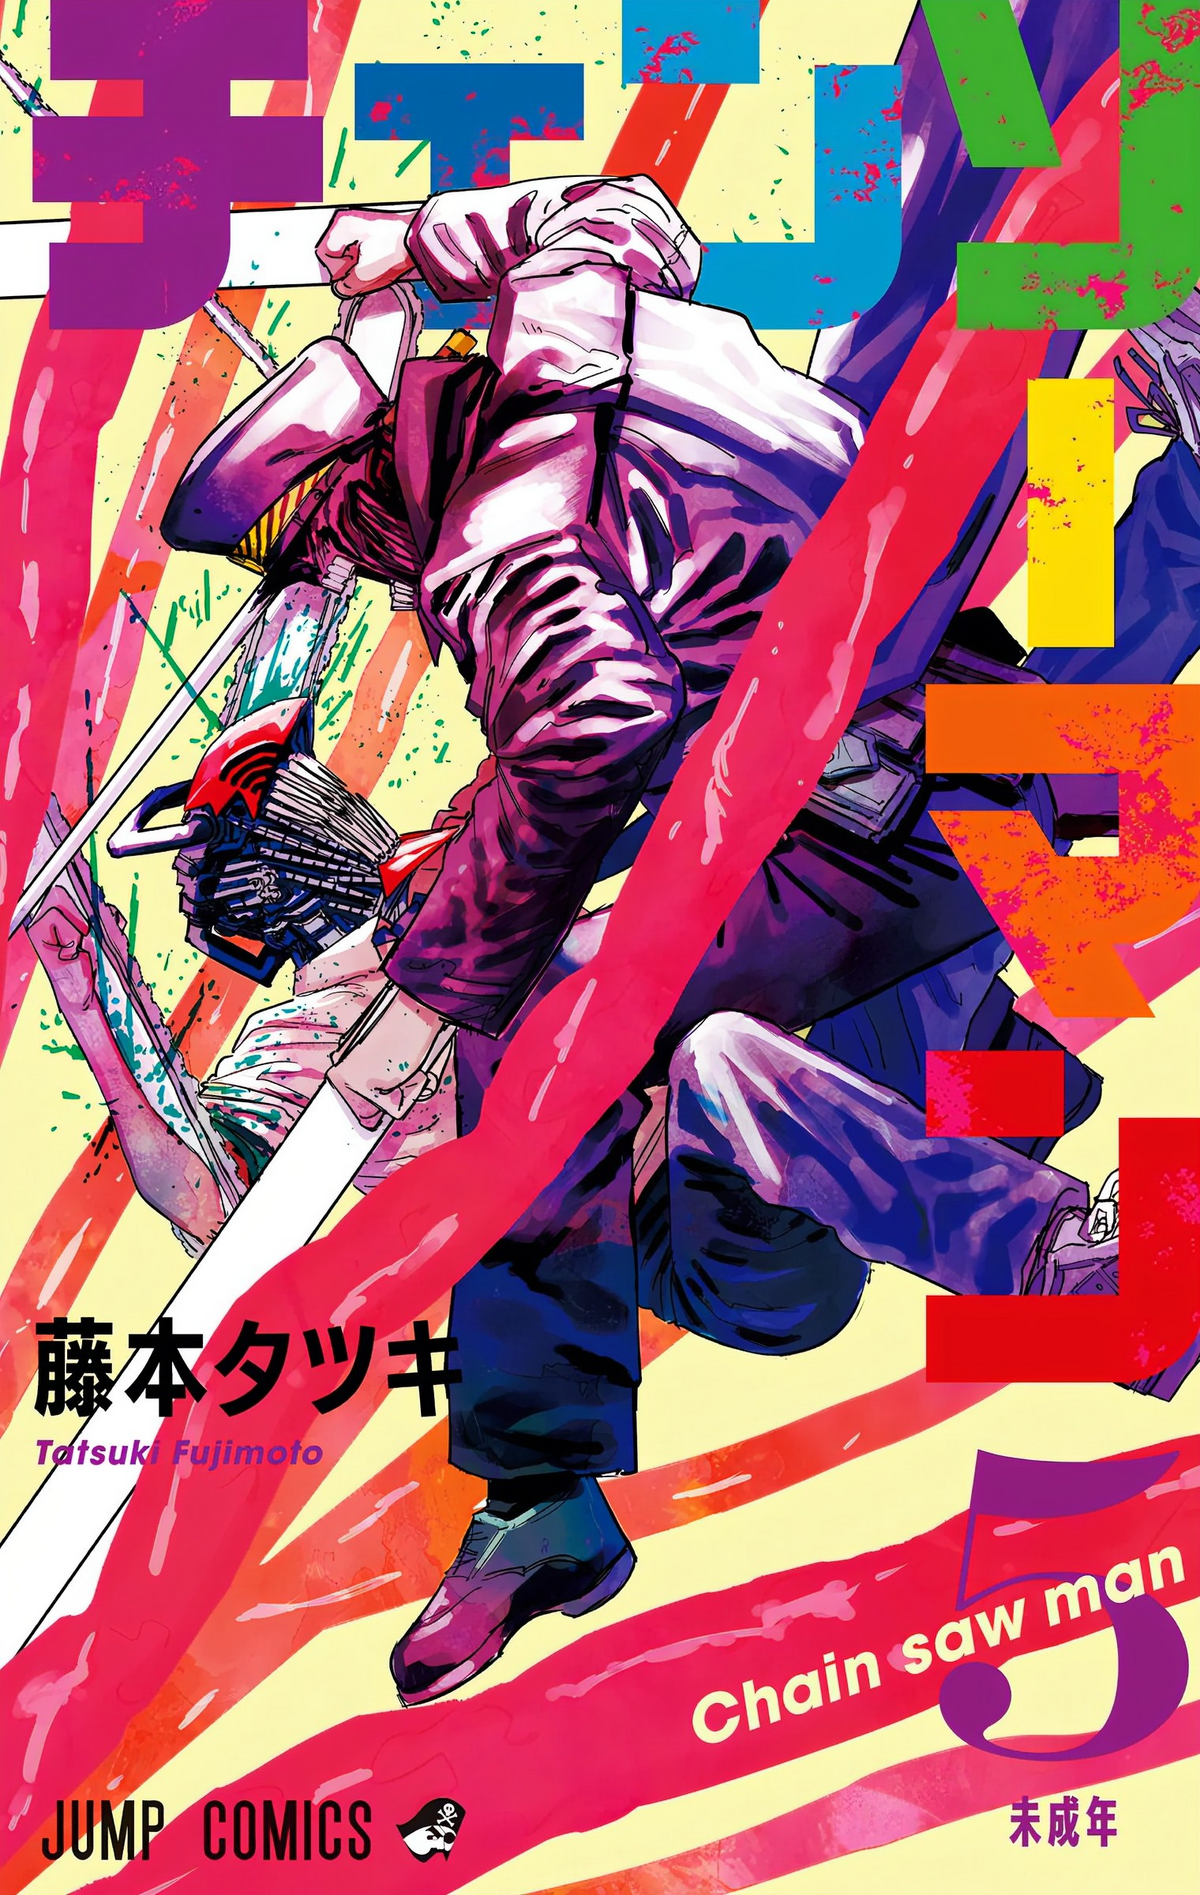 Chainsaw Man, Vol. 5 by Tatsuki Fujimoto